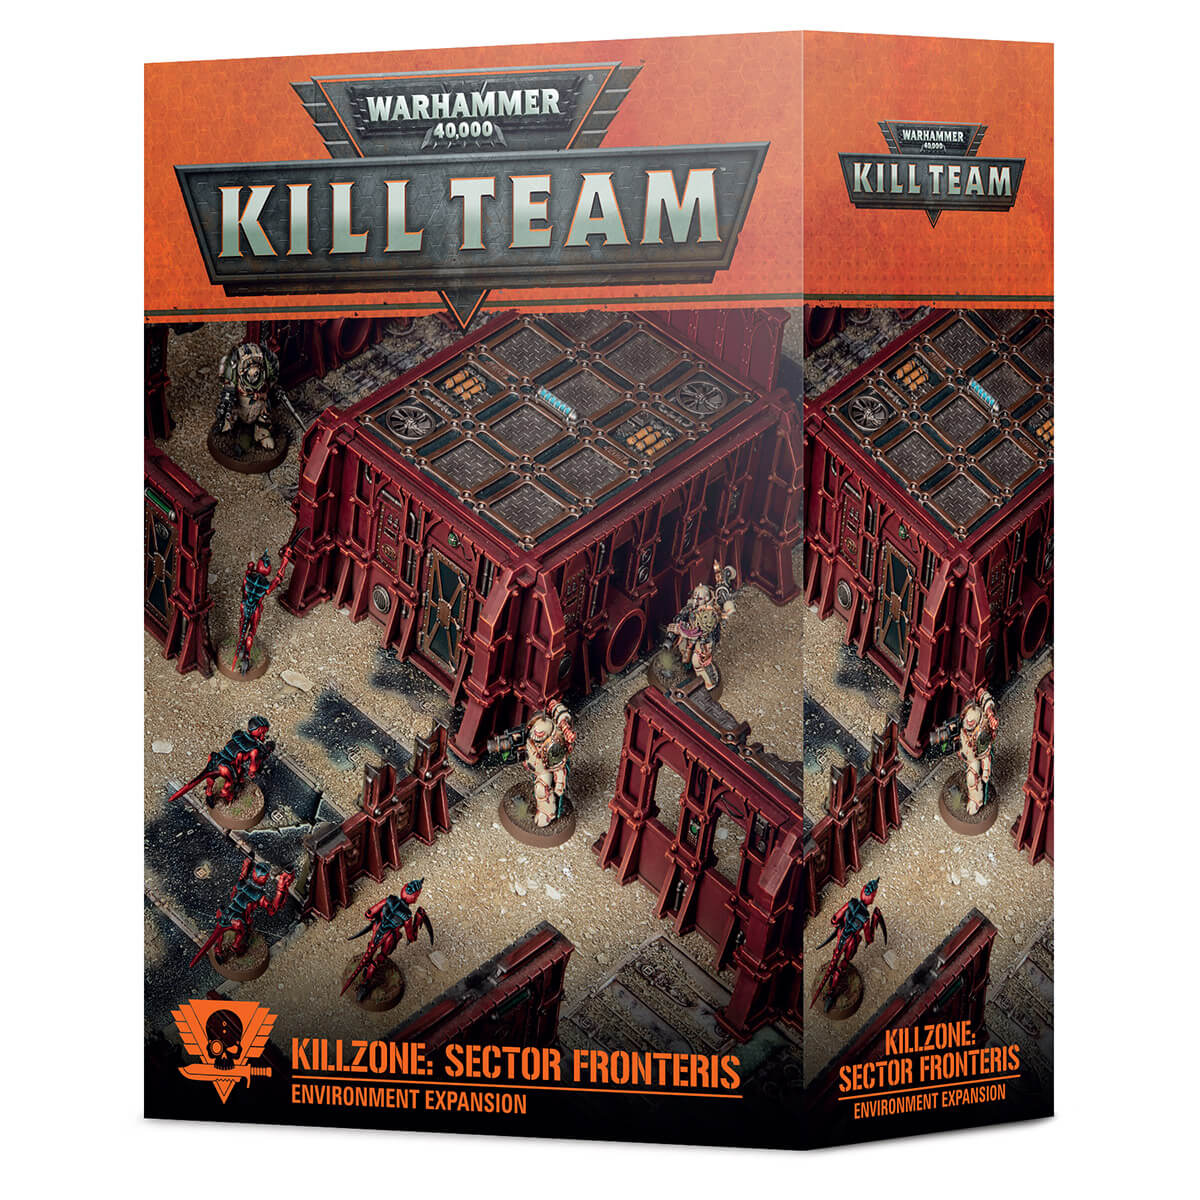 Warhammer 40k Kill Team Killzone: Sector Fronteris Environment Expansion